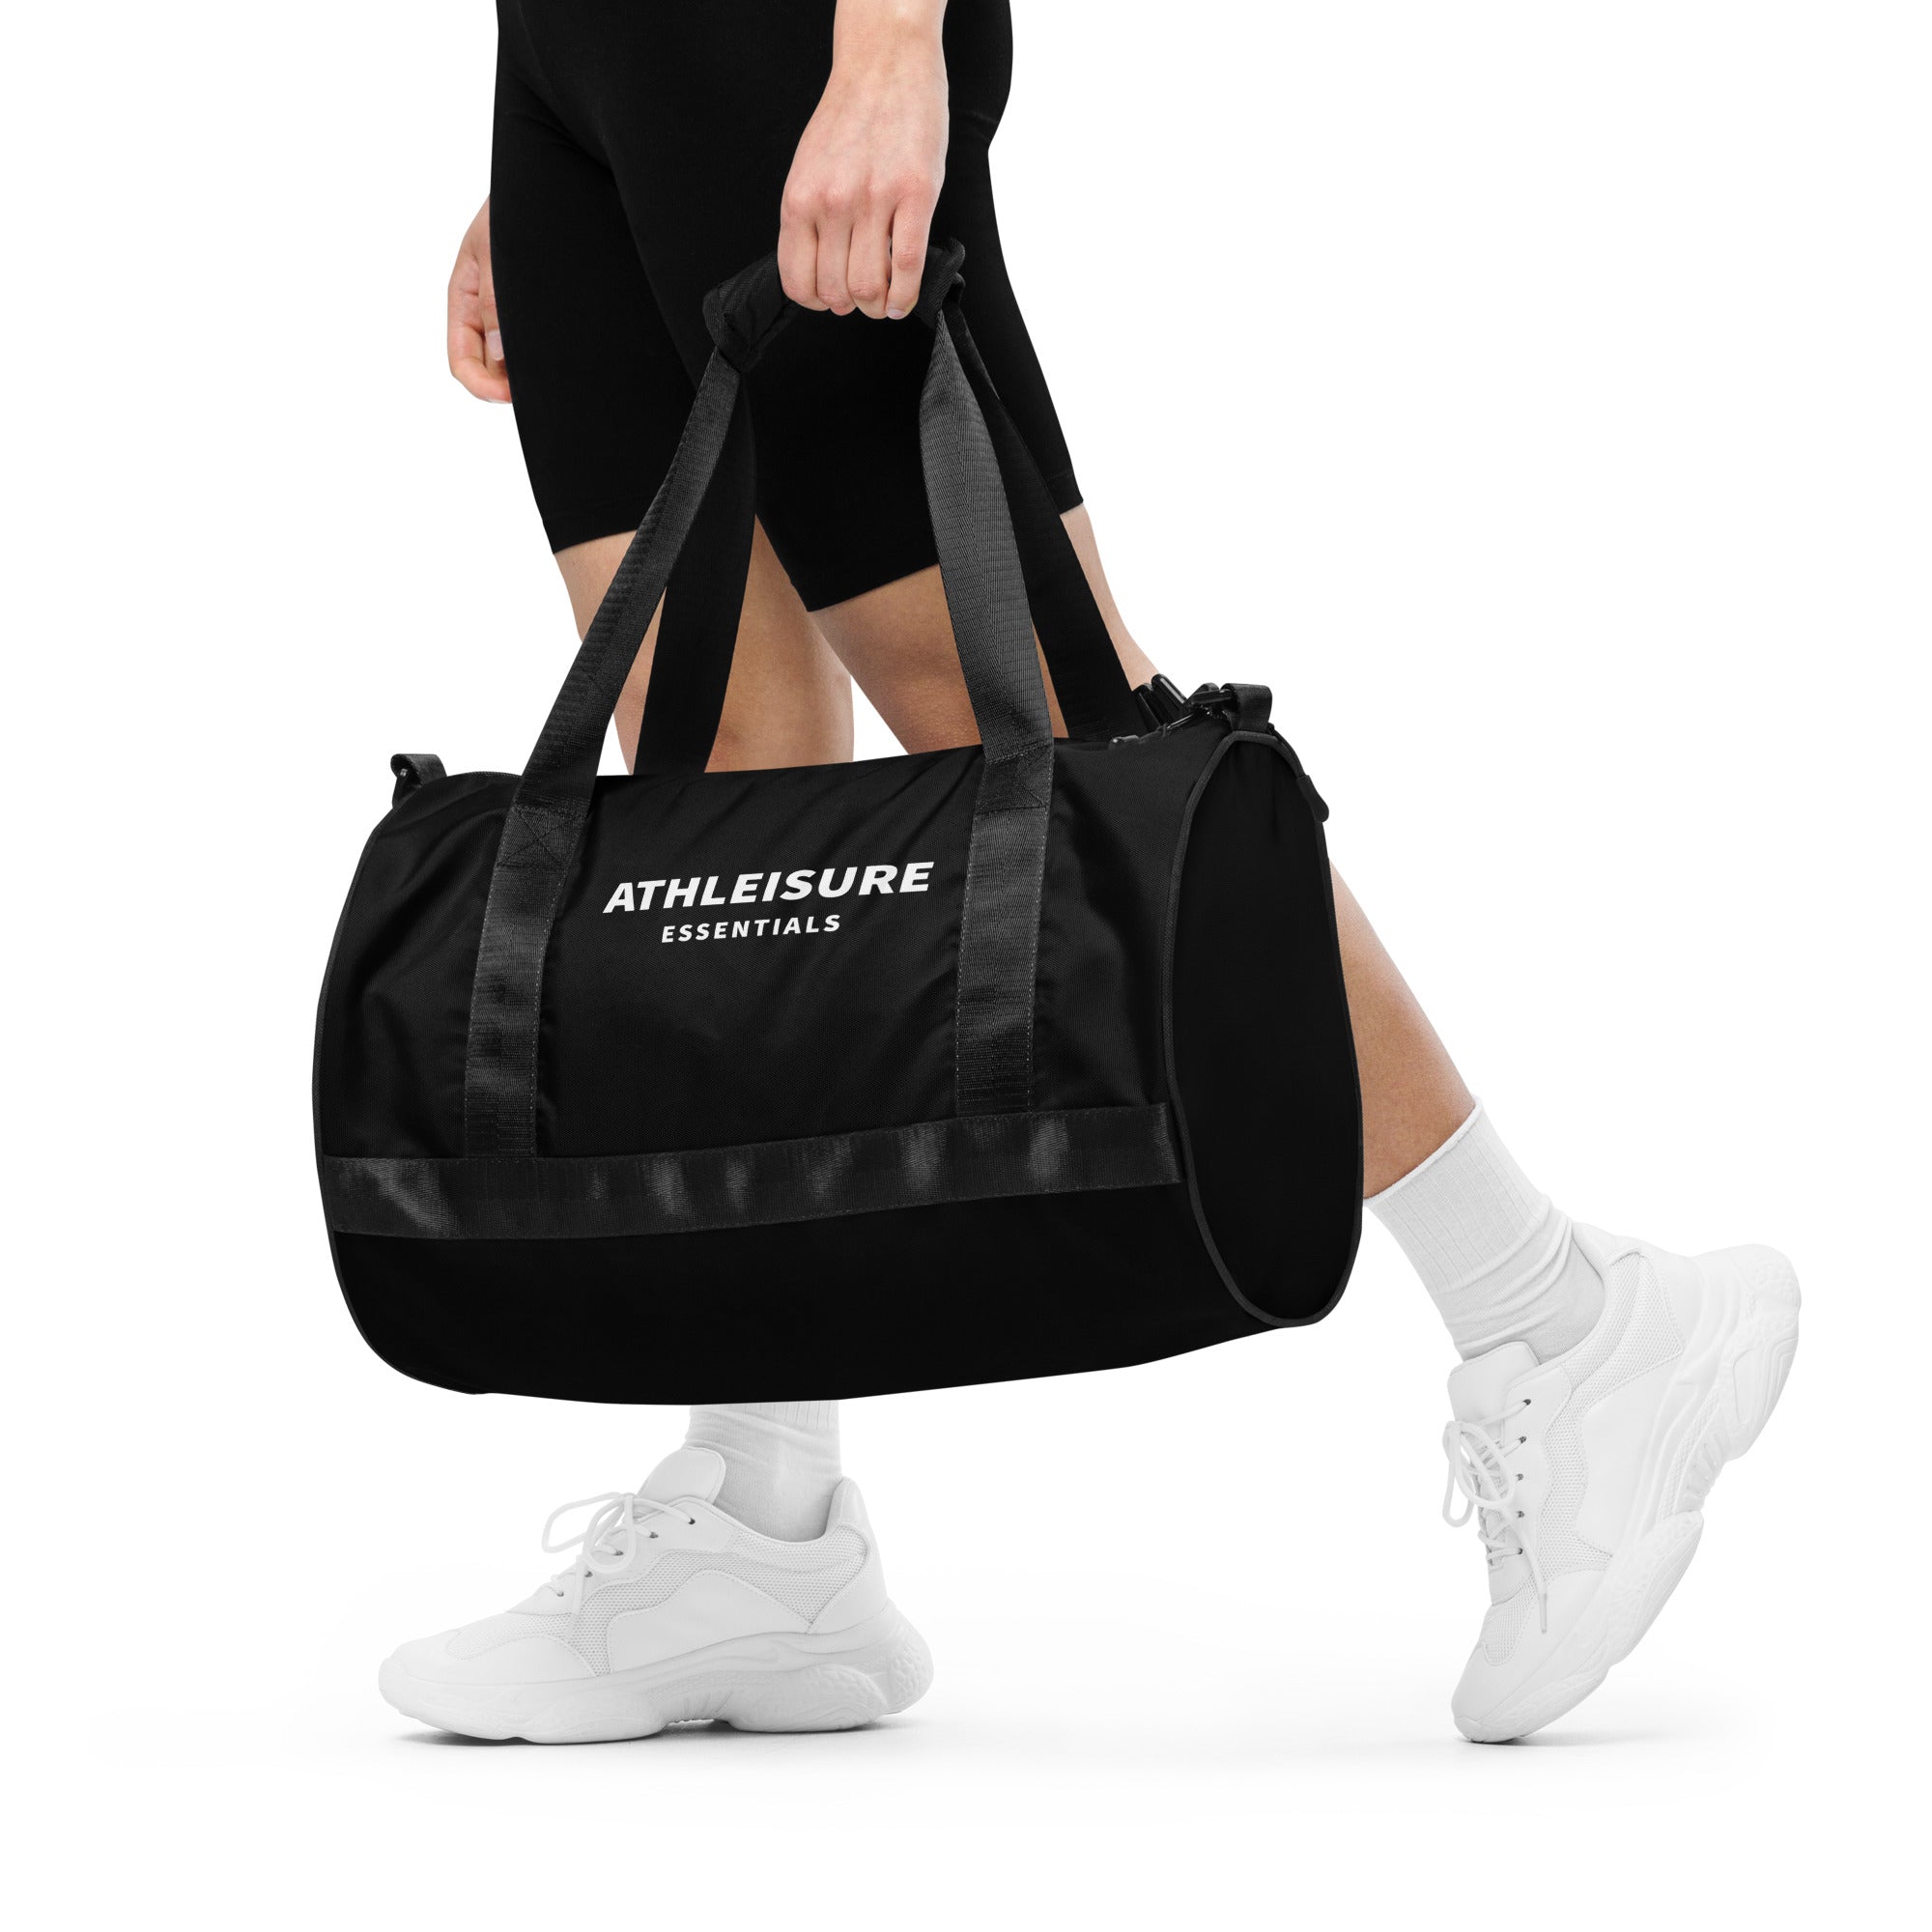 Athleisure Soft Weekender Bag - A New Day Black | eBay